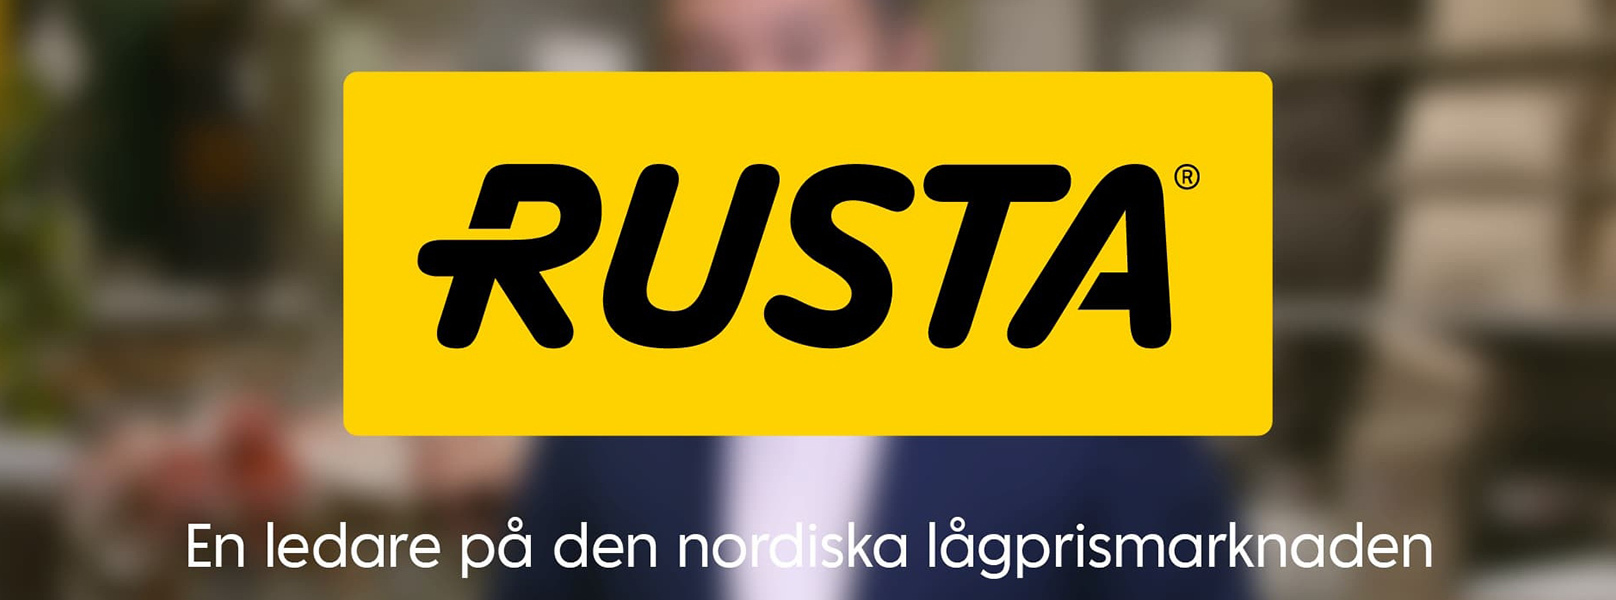 rusta-video-banner-sv